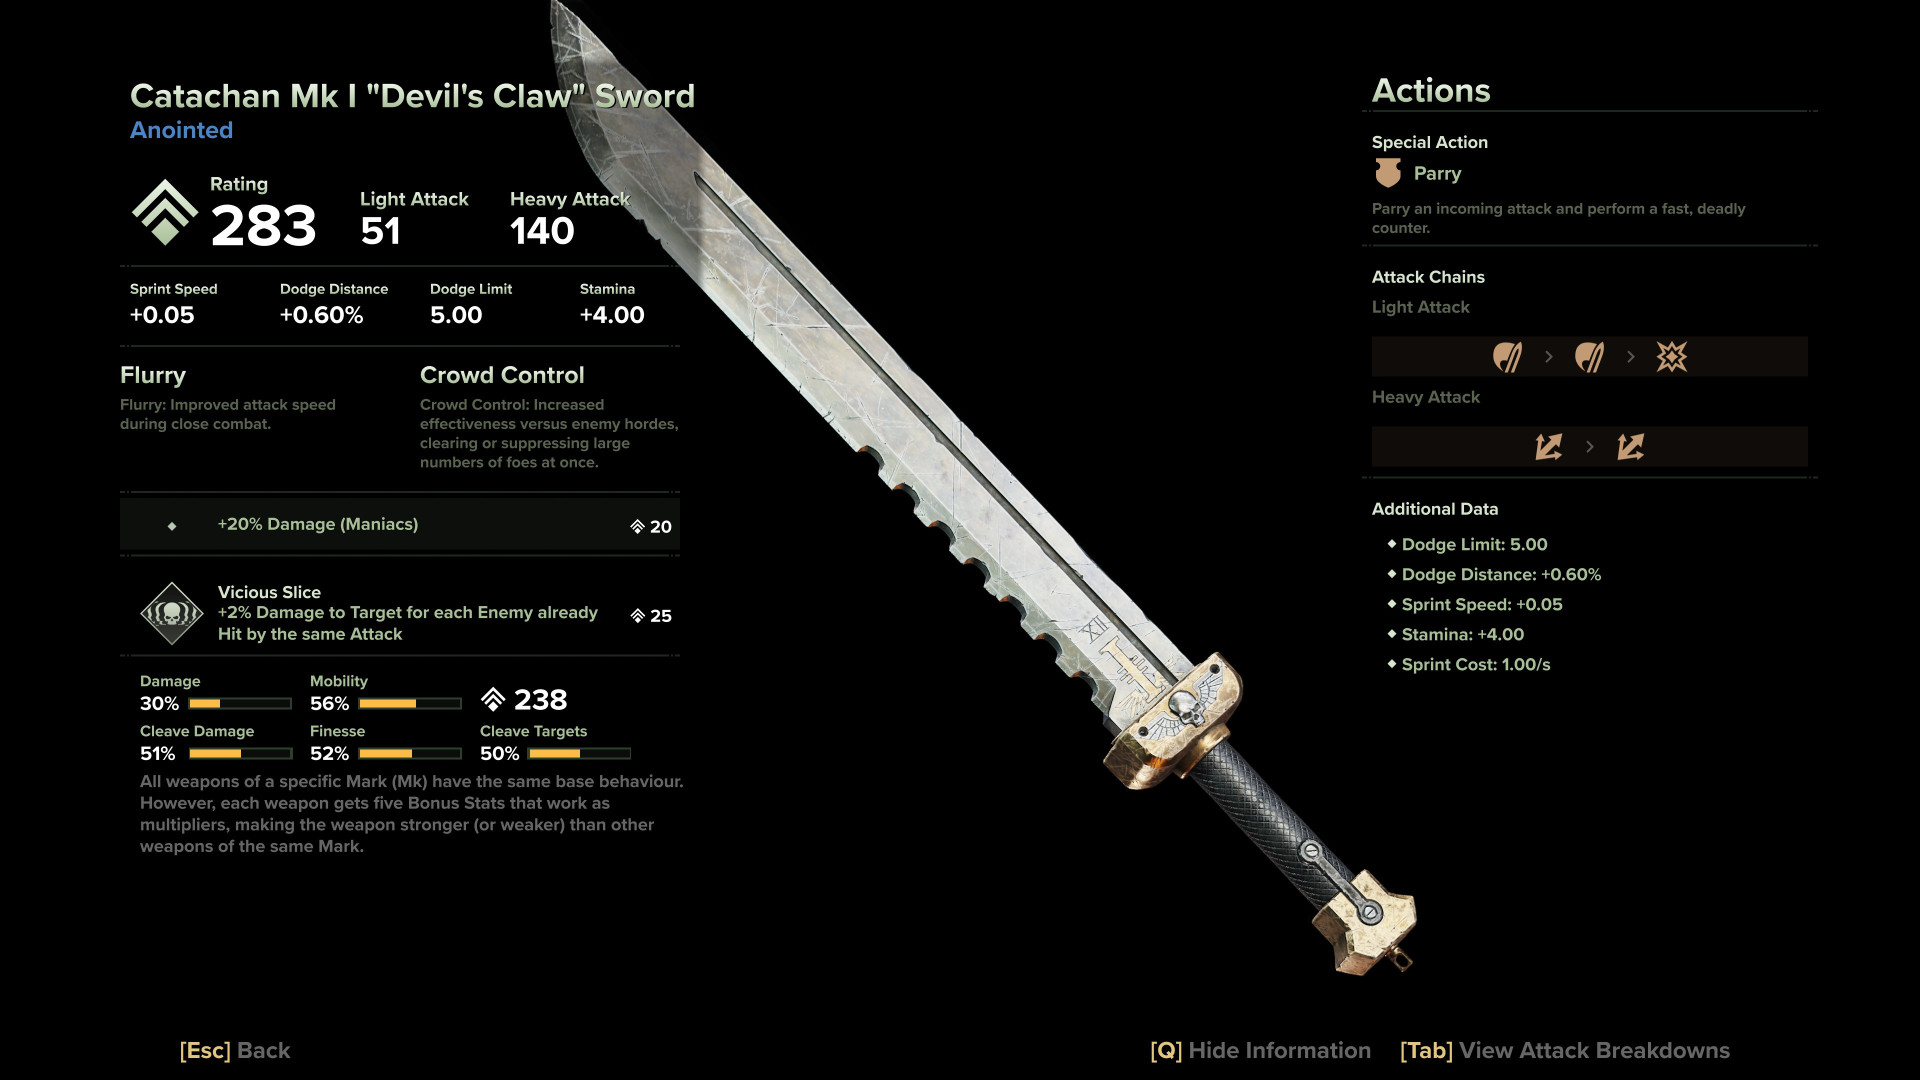 Catachan Mk I "Devil's Claw" Sword